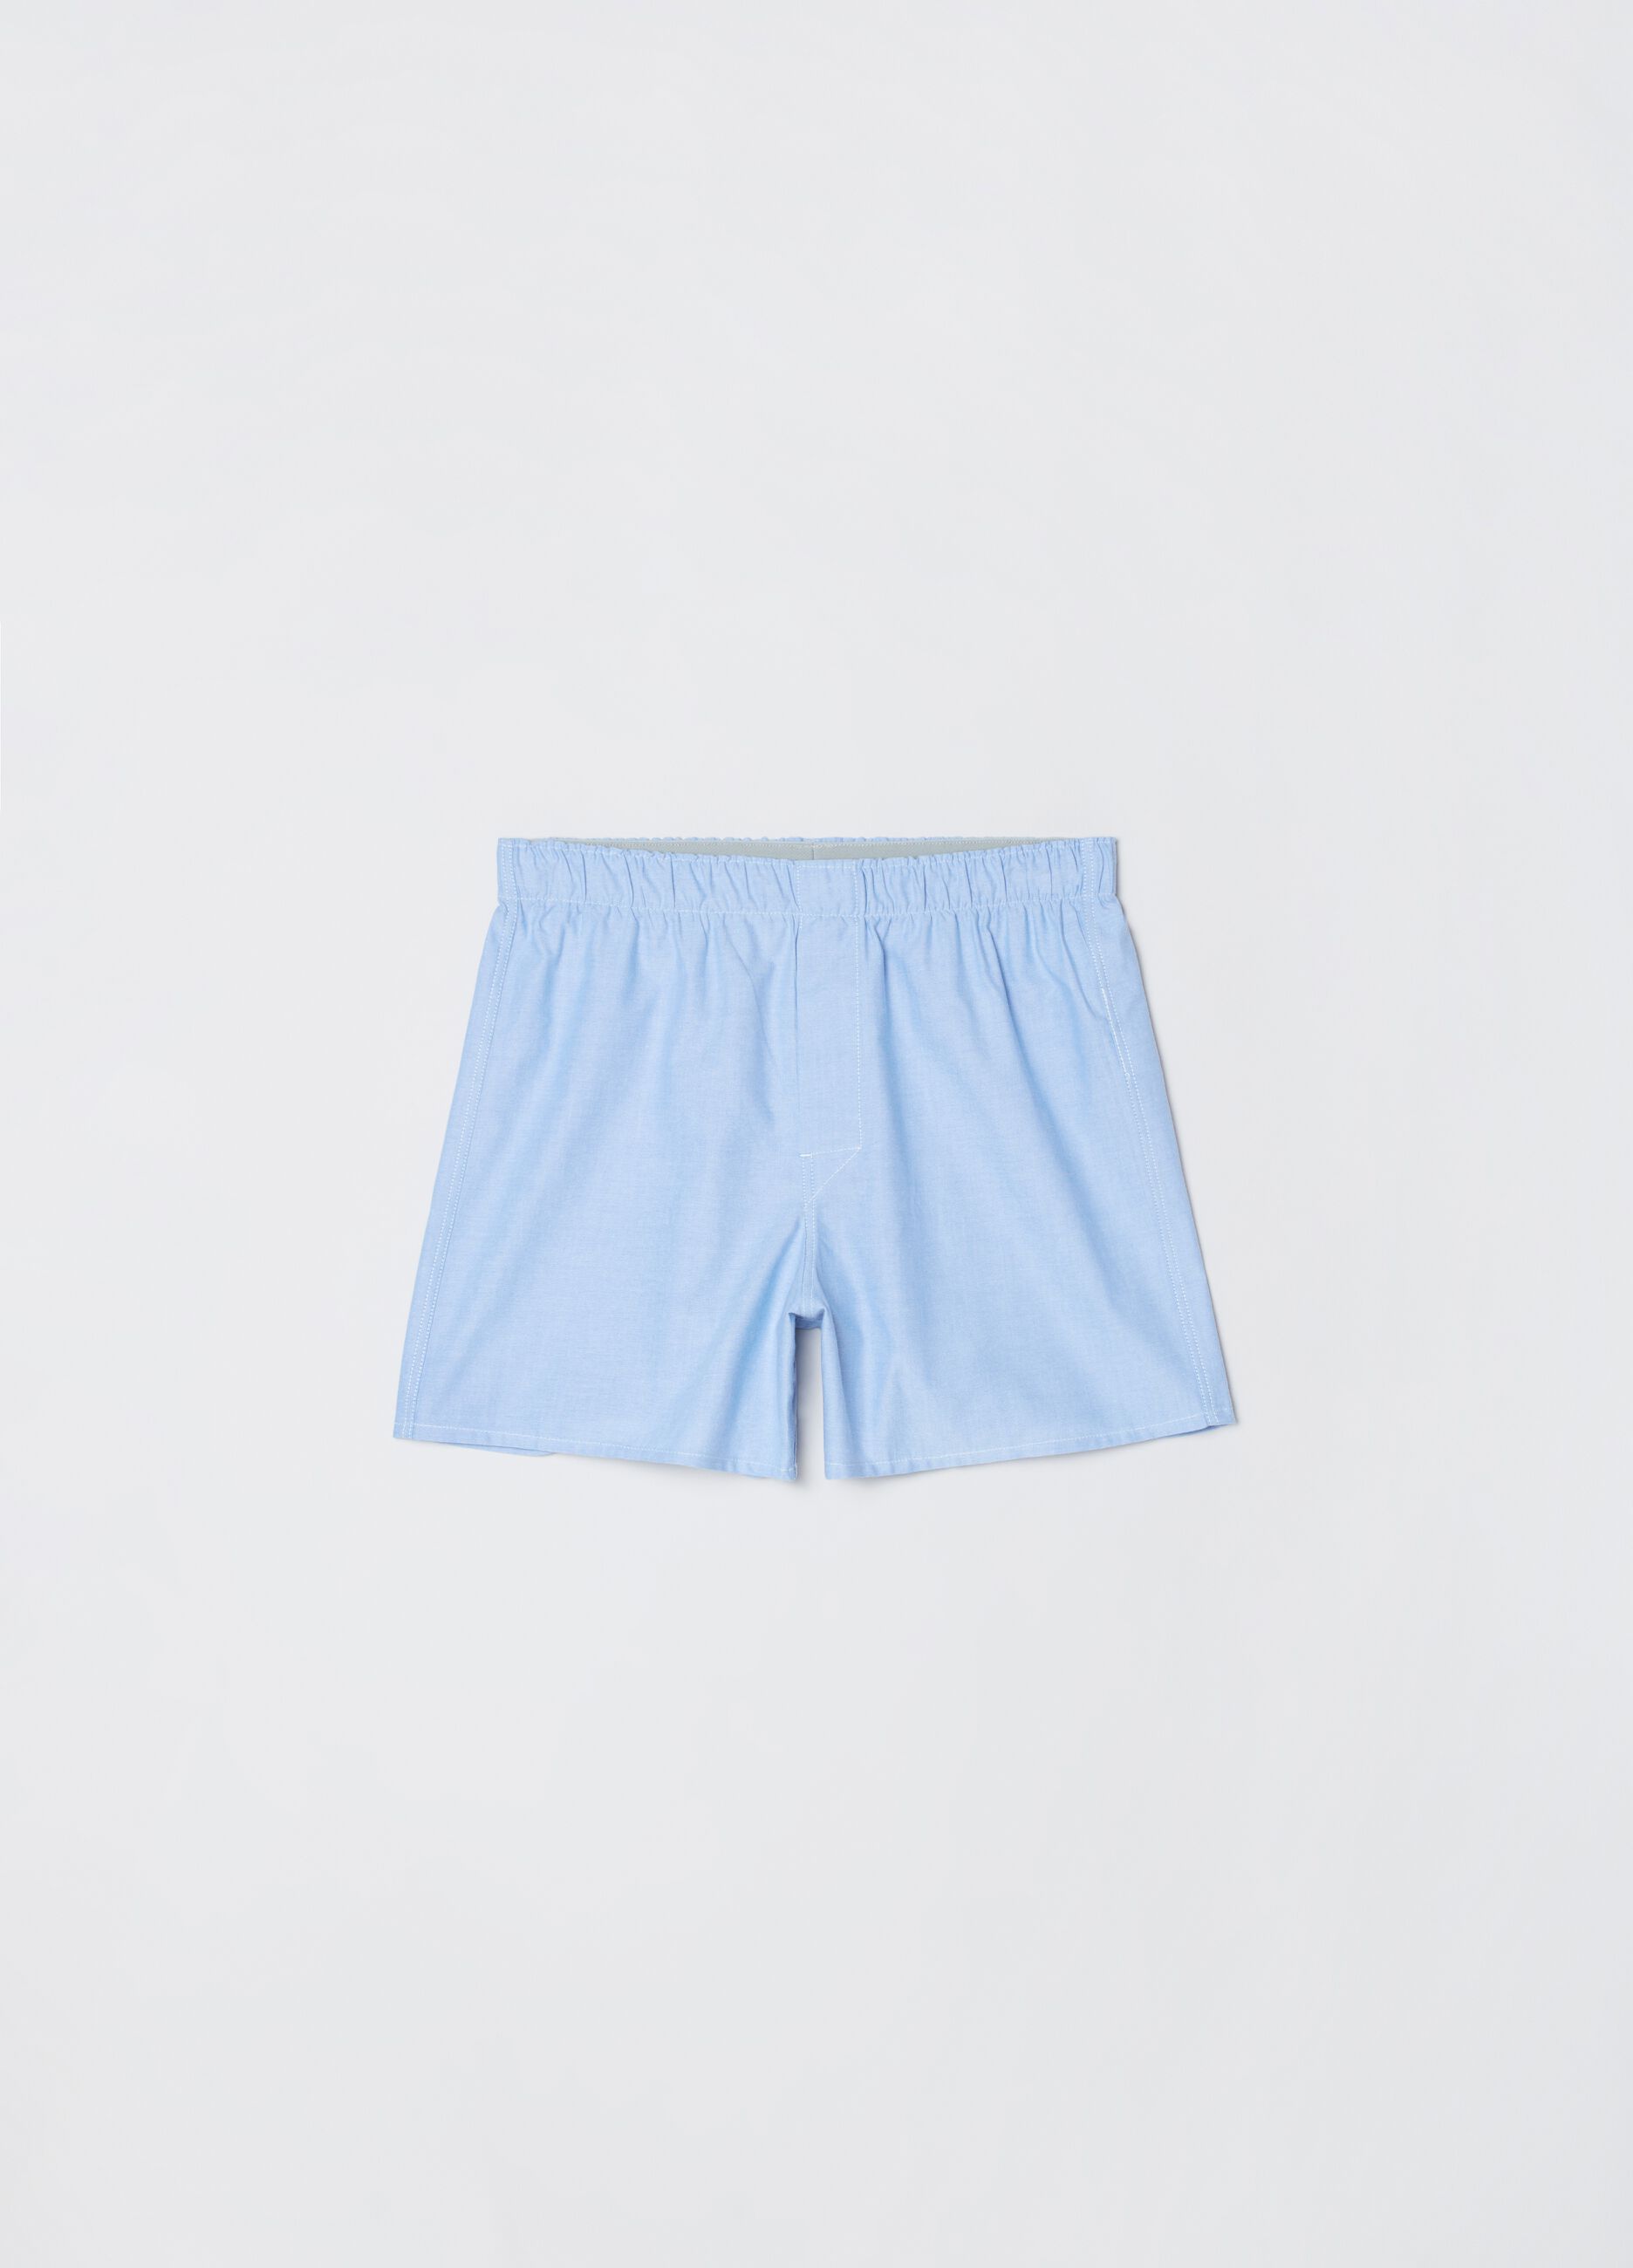 Oxford cotton boxer shorts